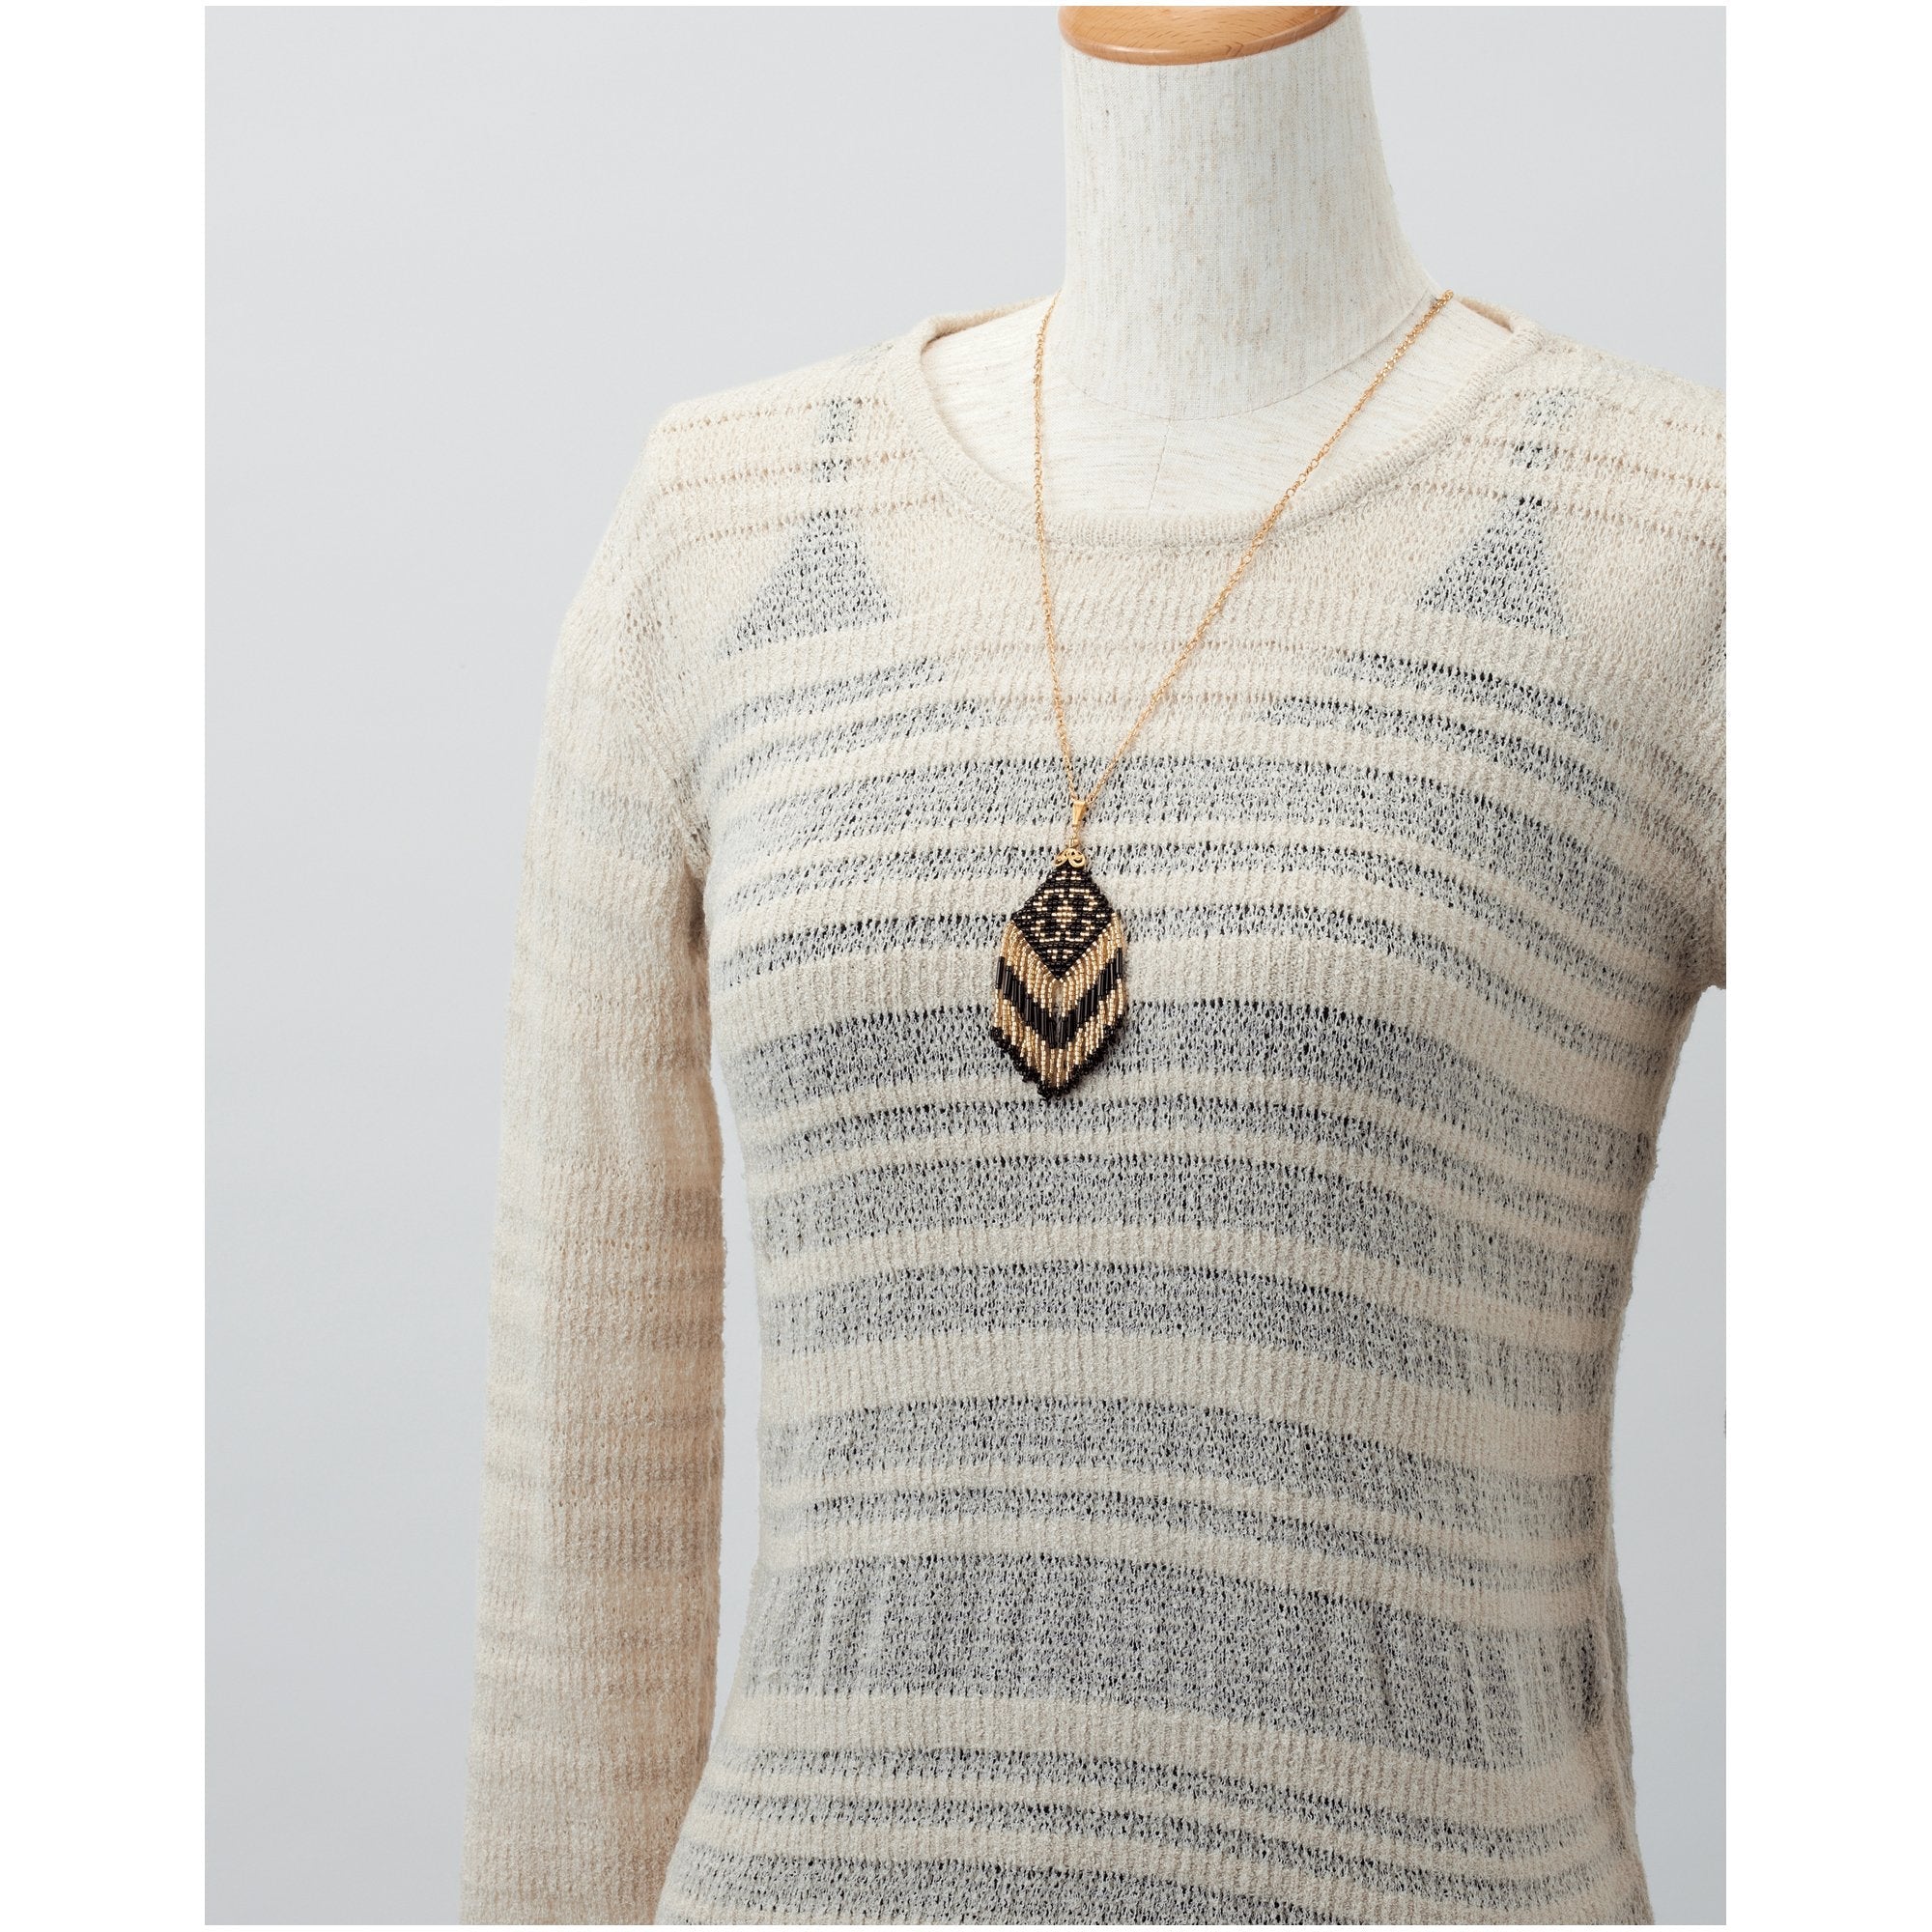 CLV - Beading Loom Kit Pendant Necklace